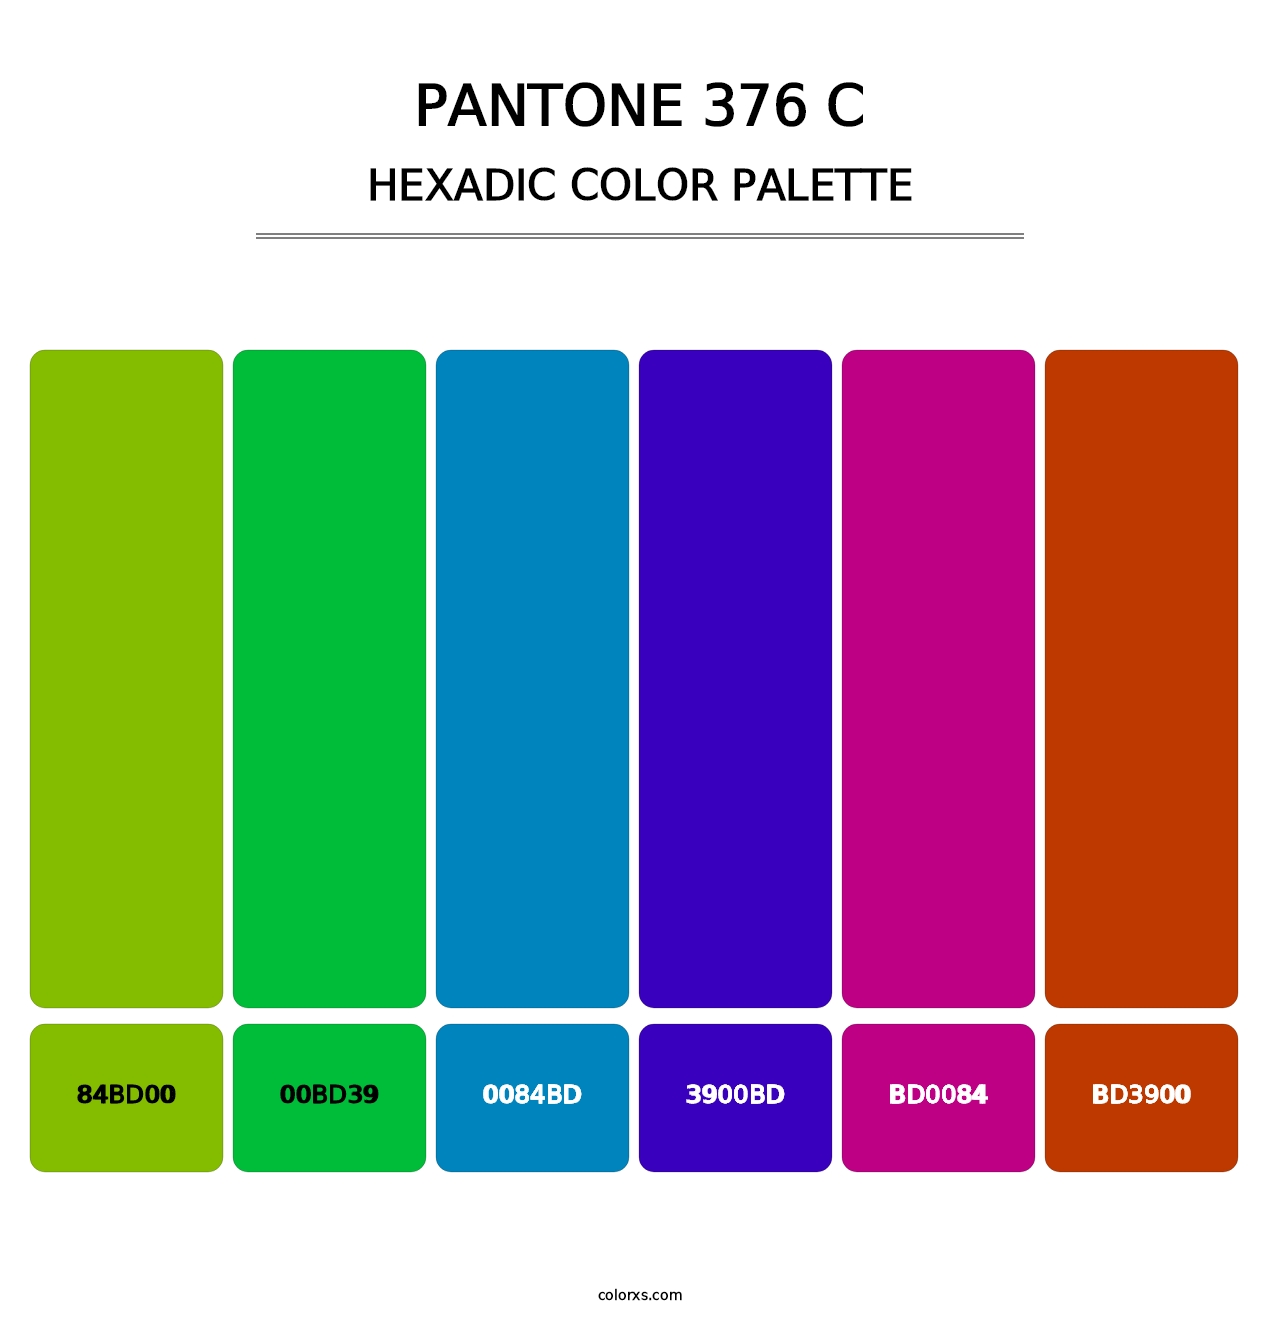 PANTONE 376 C - Hexadic Color Palette